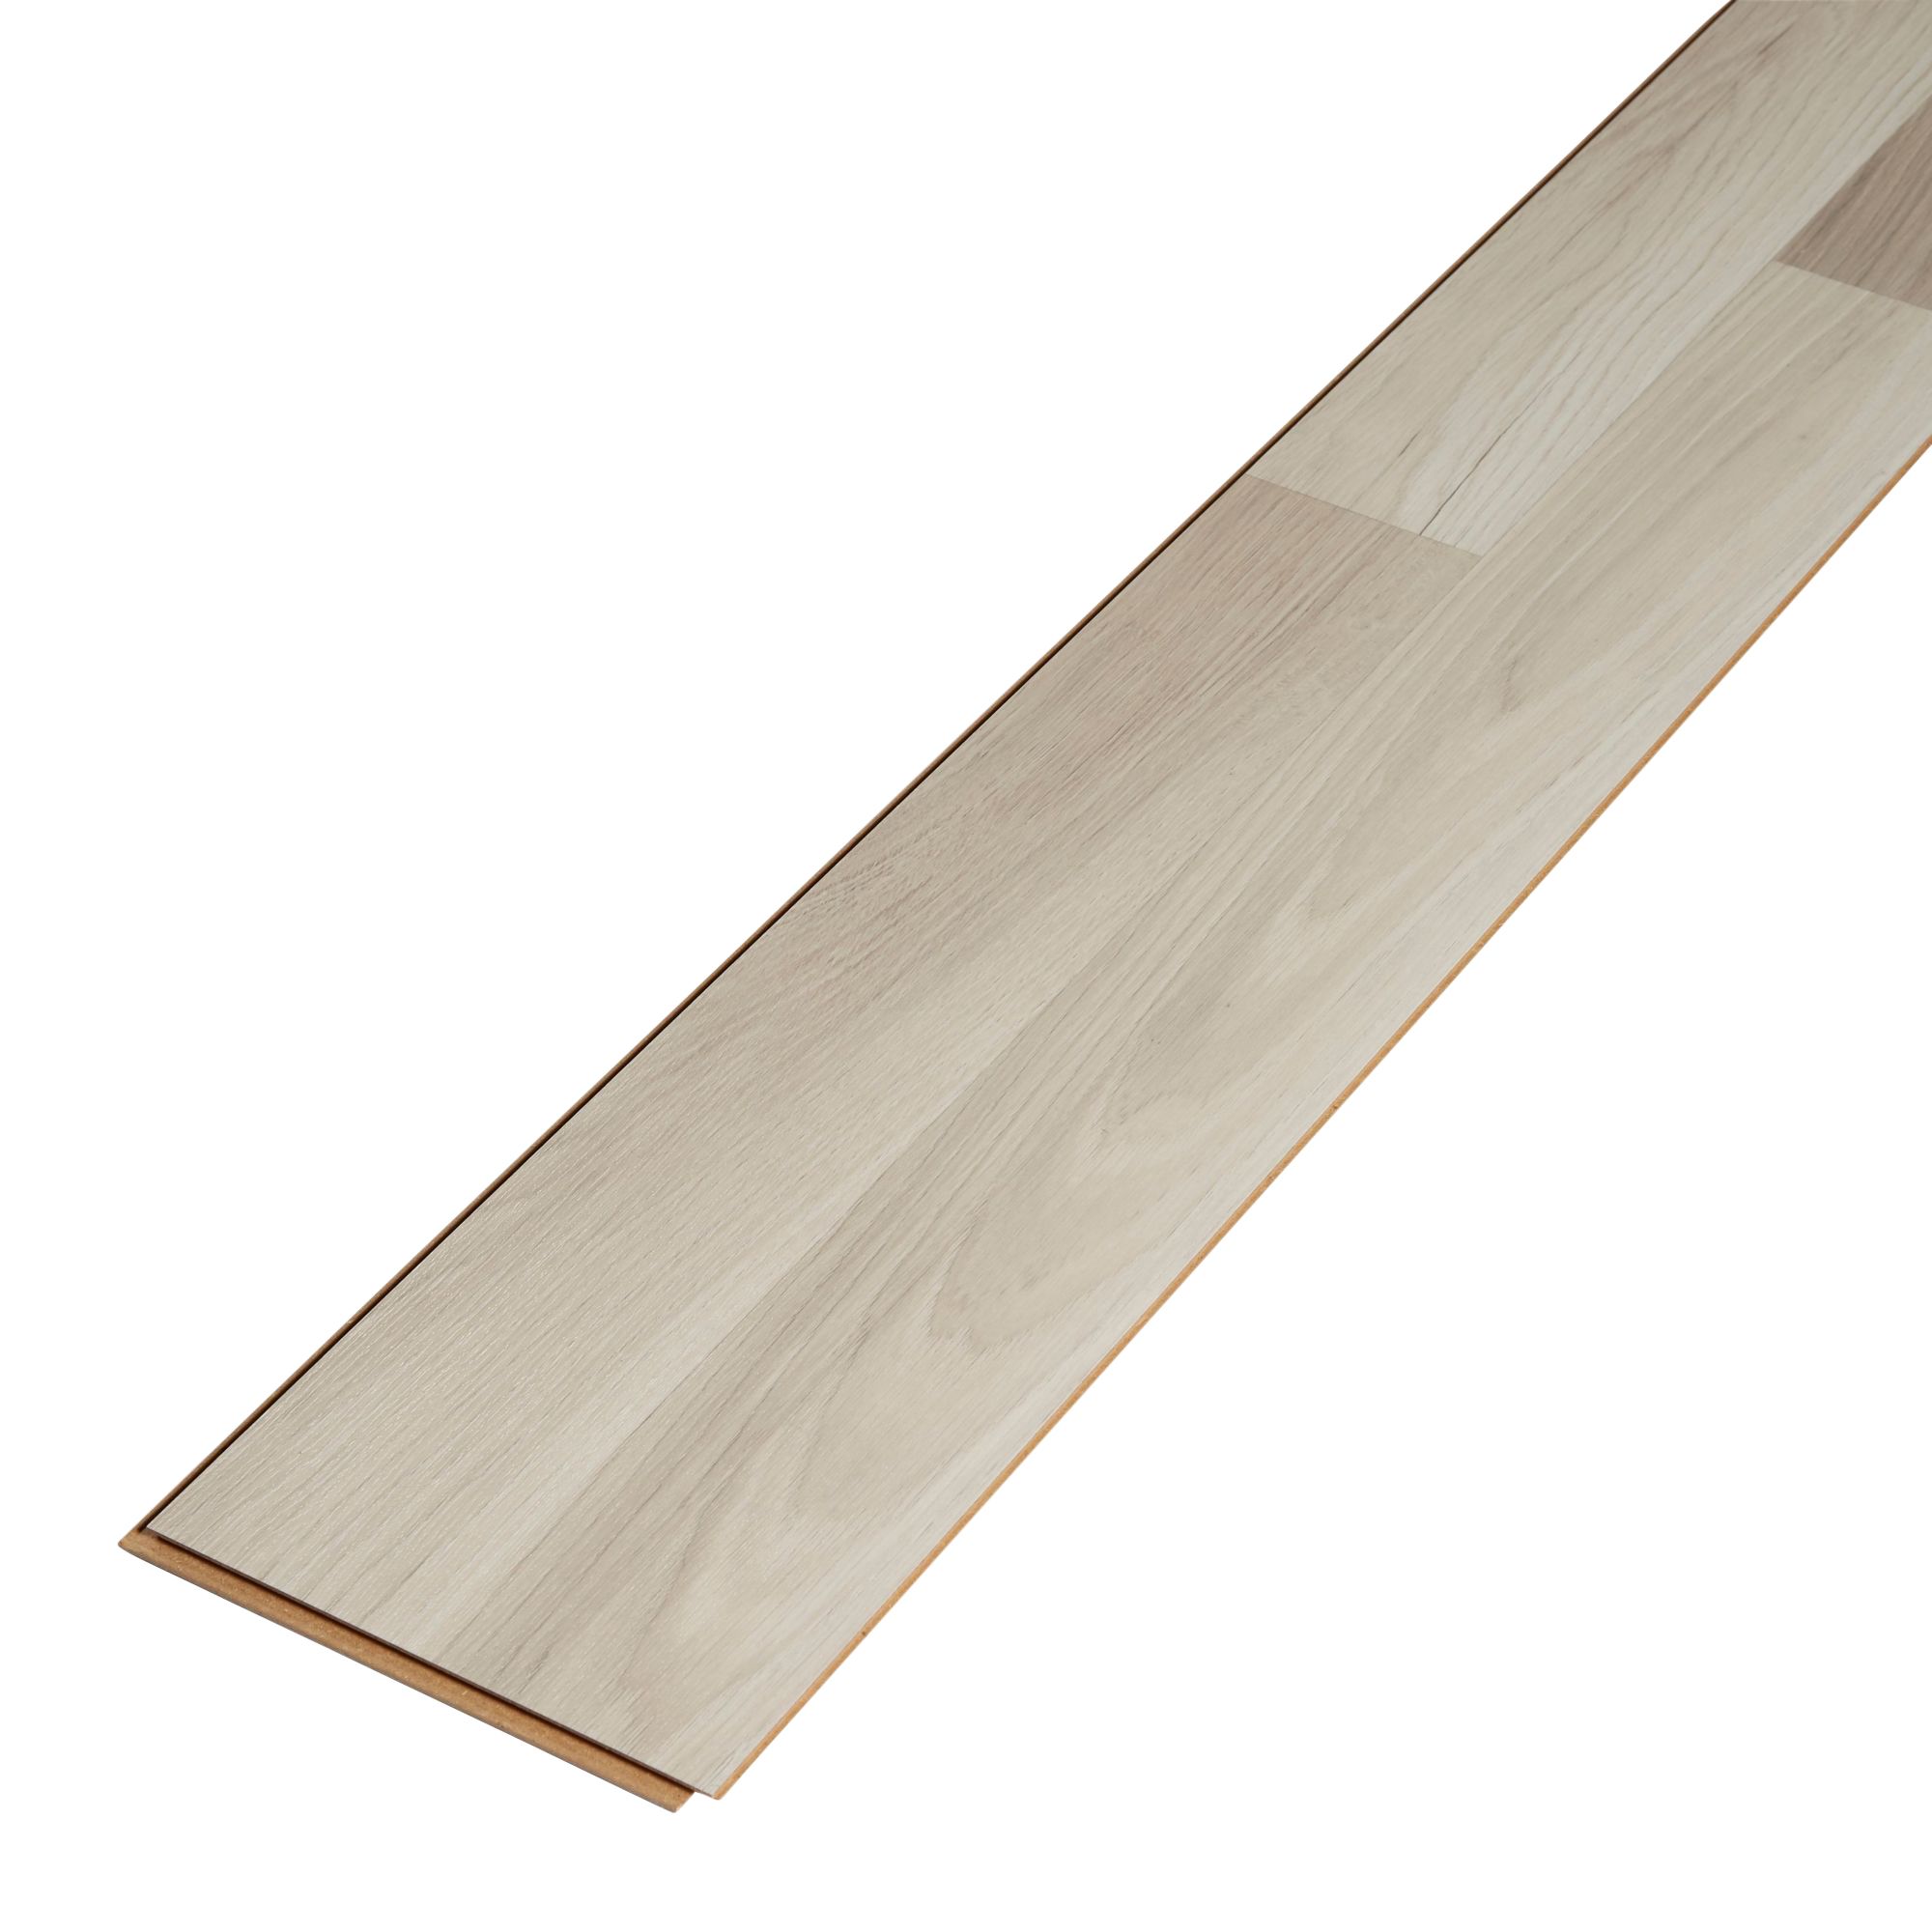 Townsville Grey Oak effect Laminate Flooring Sample 